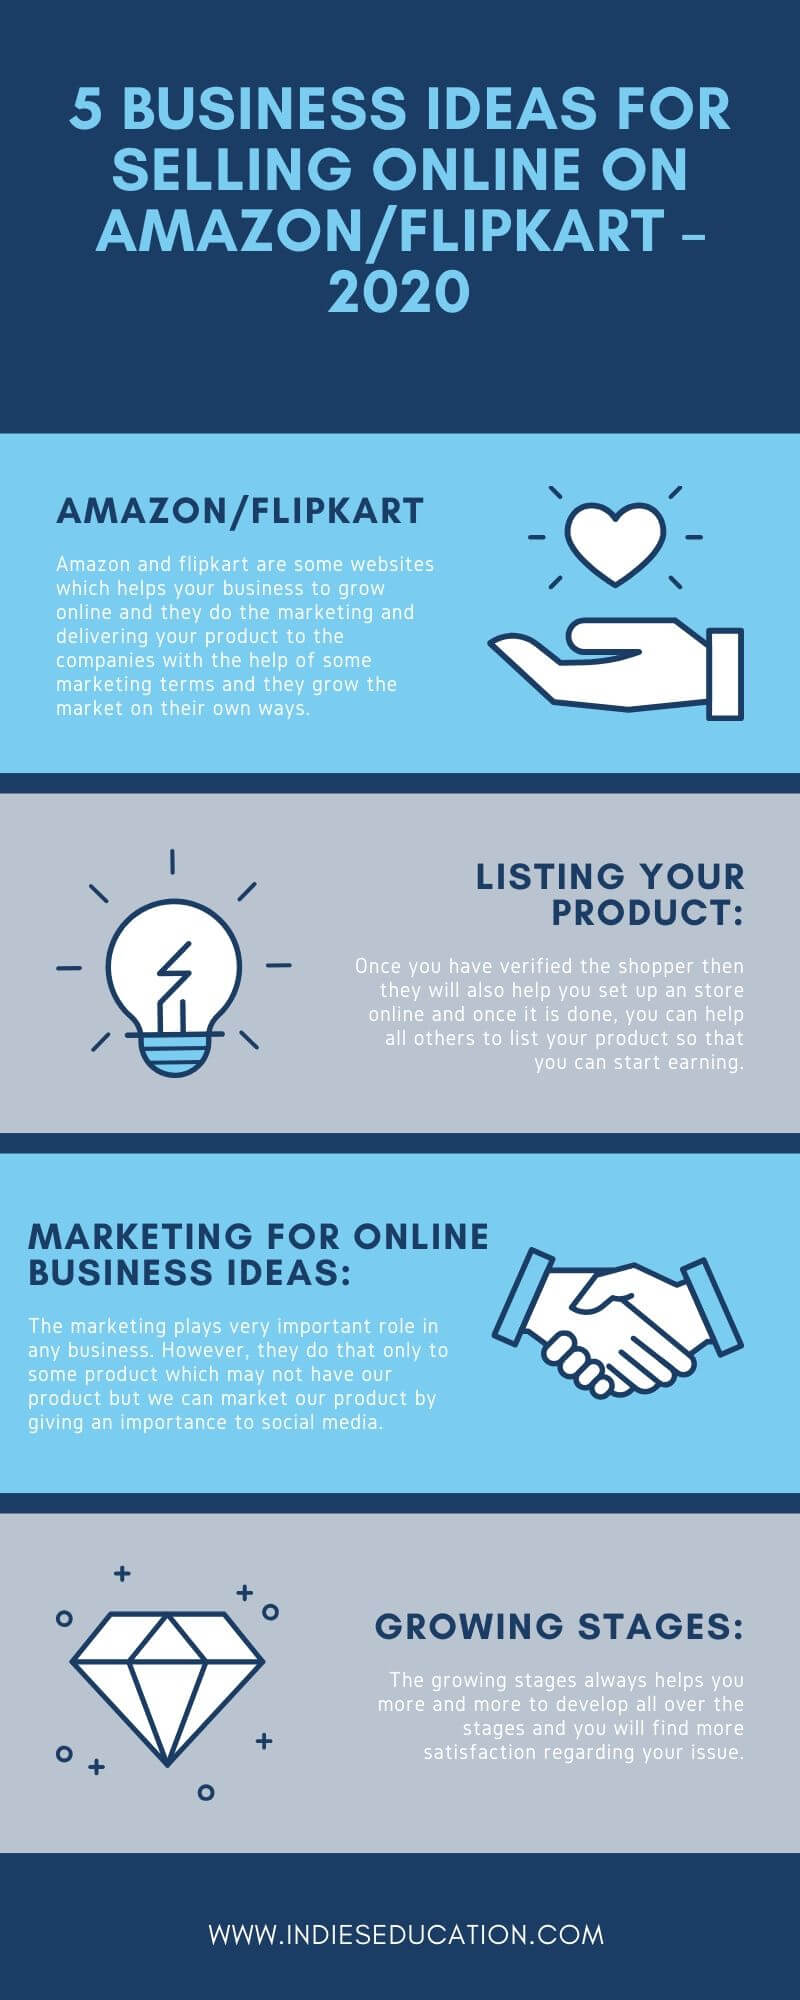 5 Business Ideas for Selling Online on Amazon/Flipkart - 2020